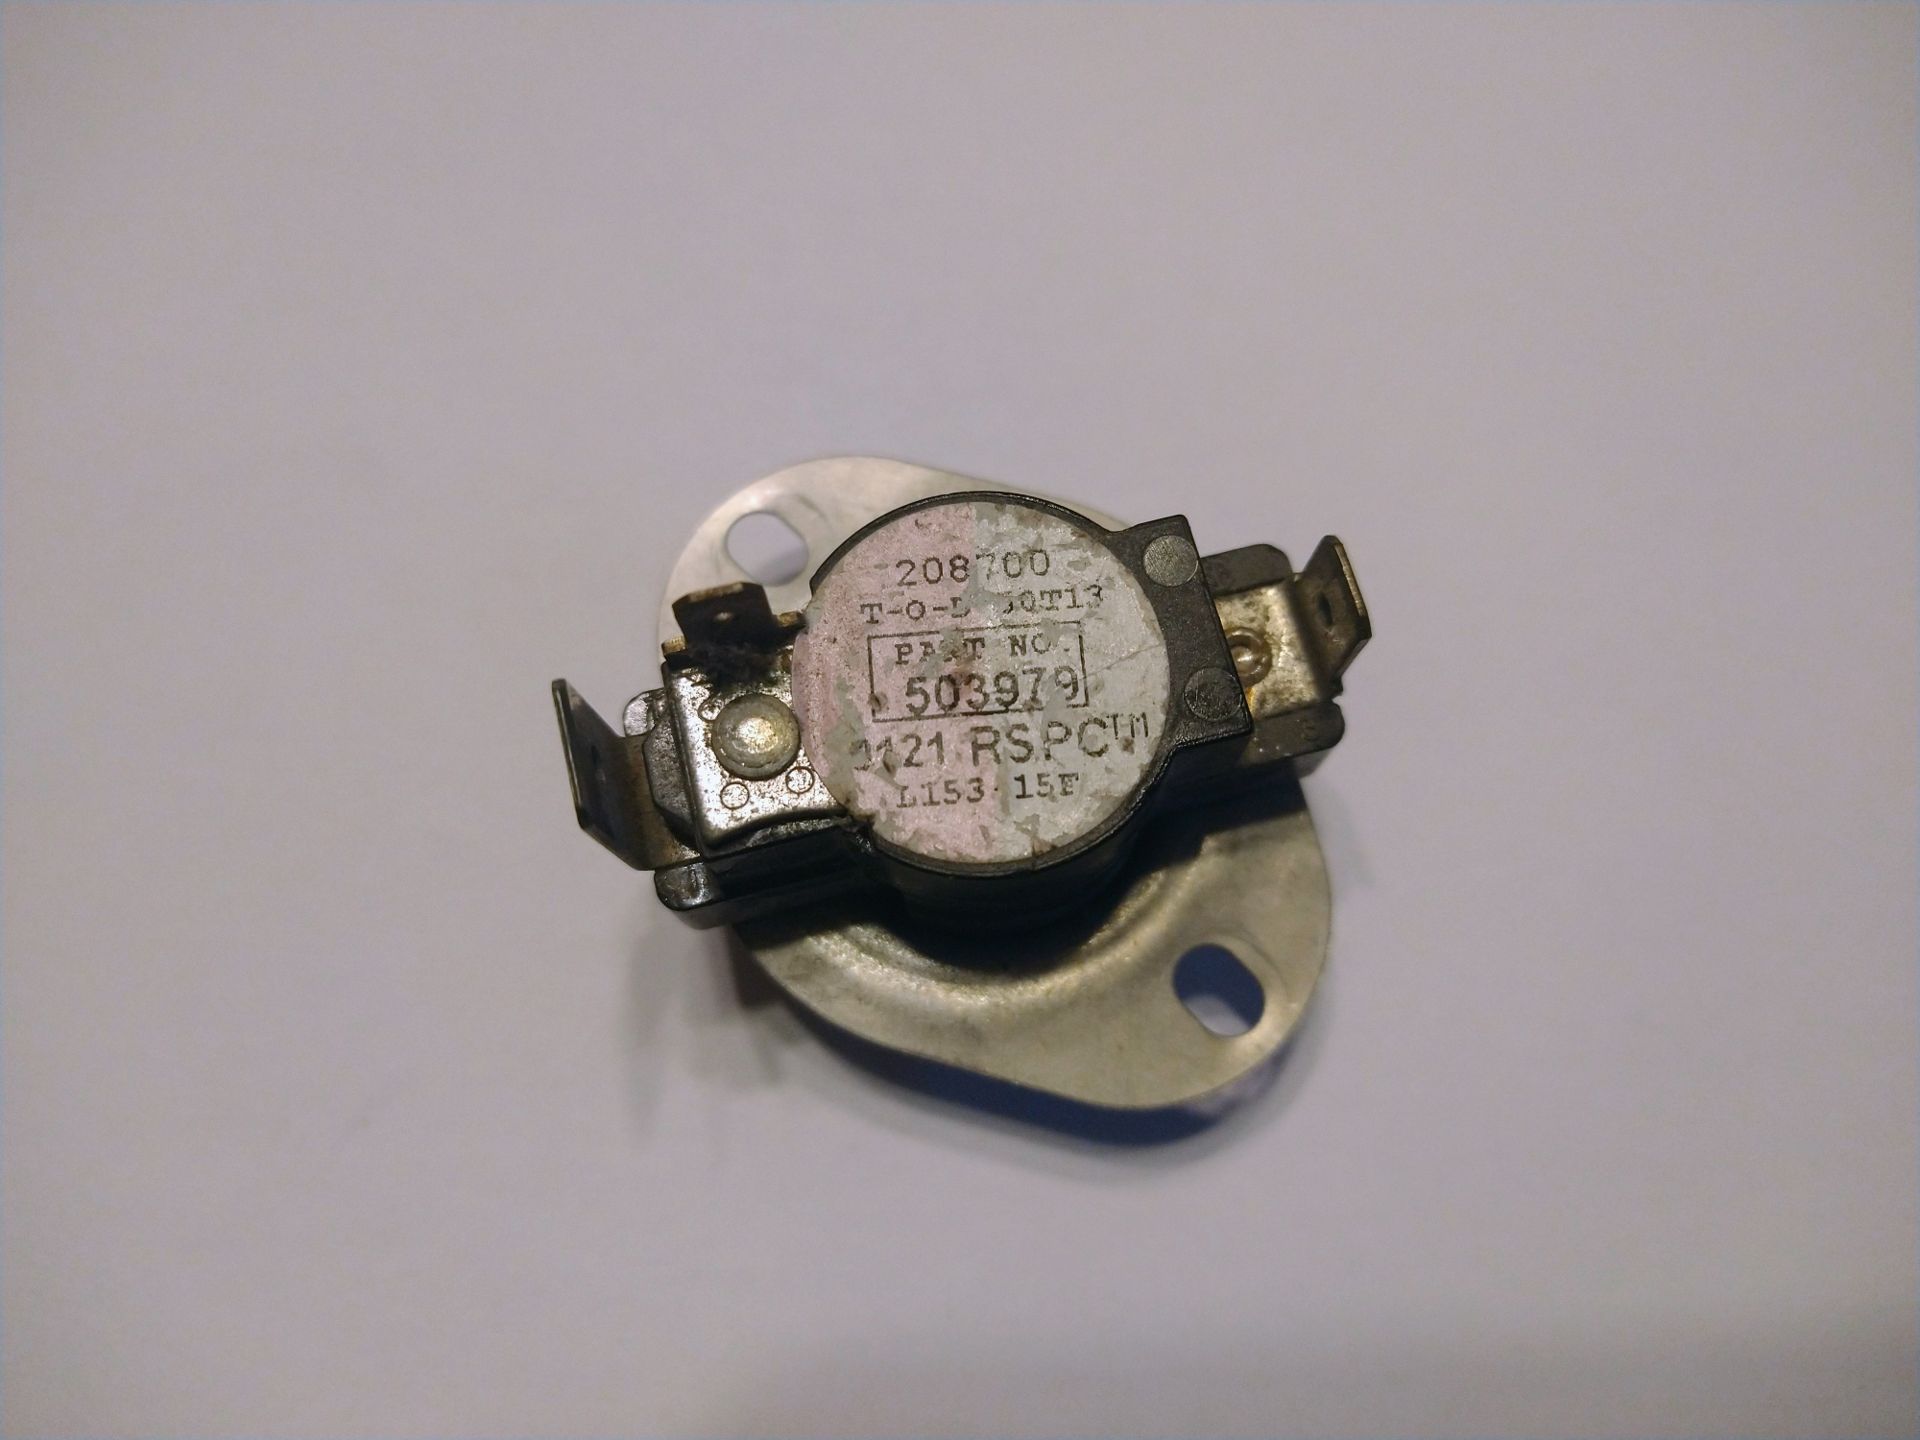 Whirlpool Dryer Thermostat 503979 L153-15F